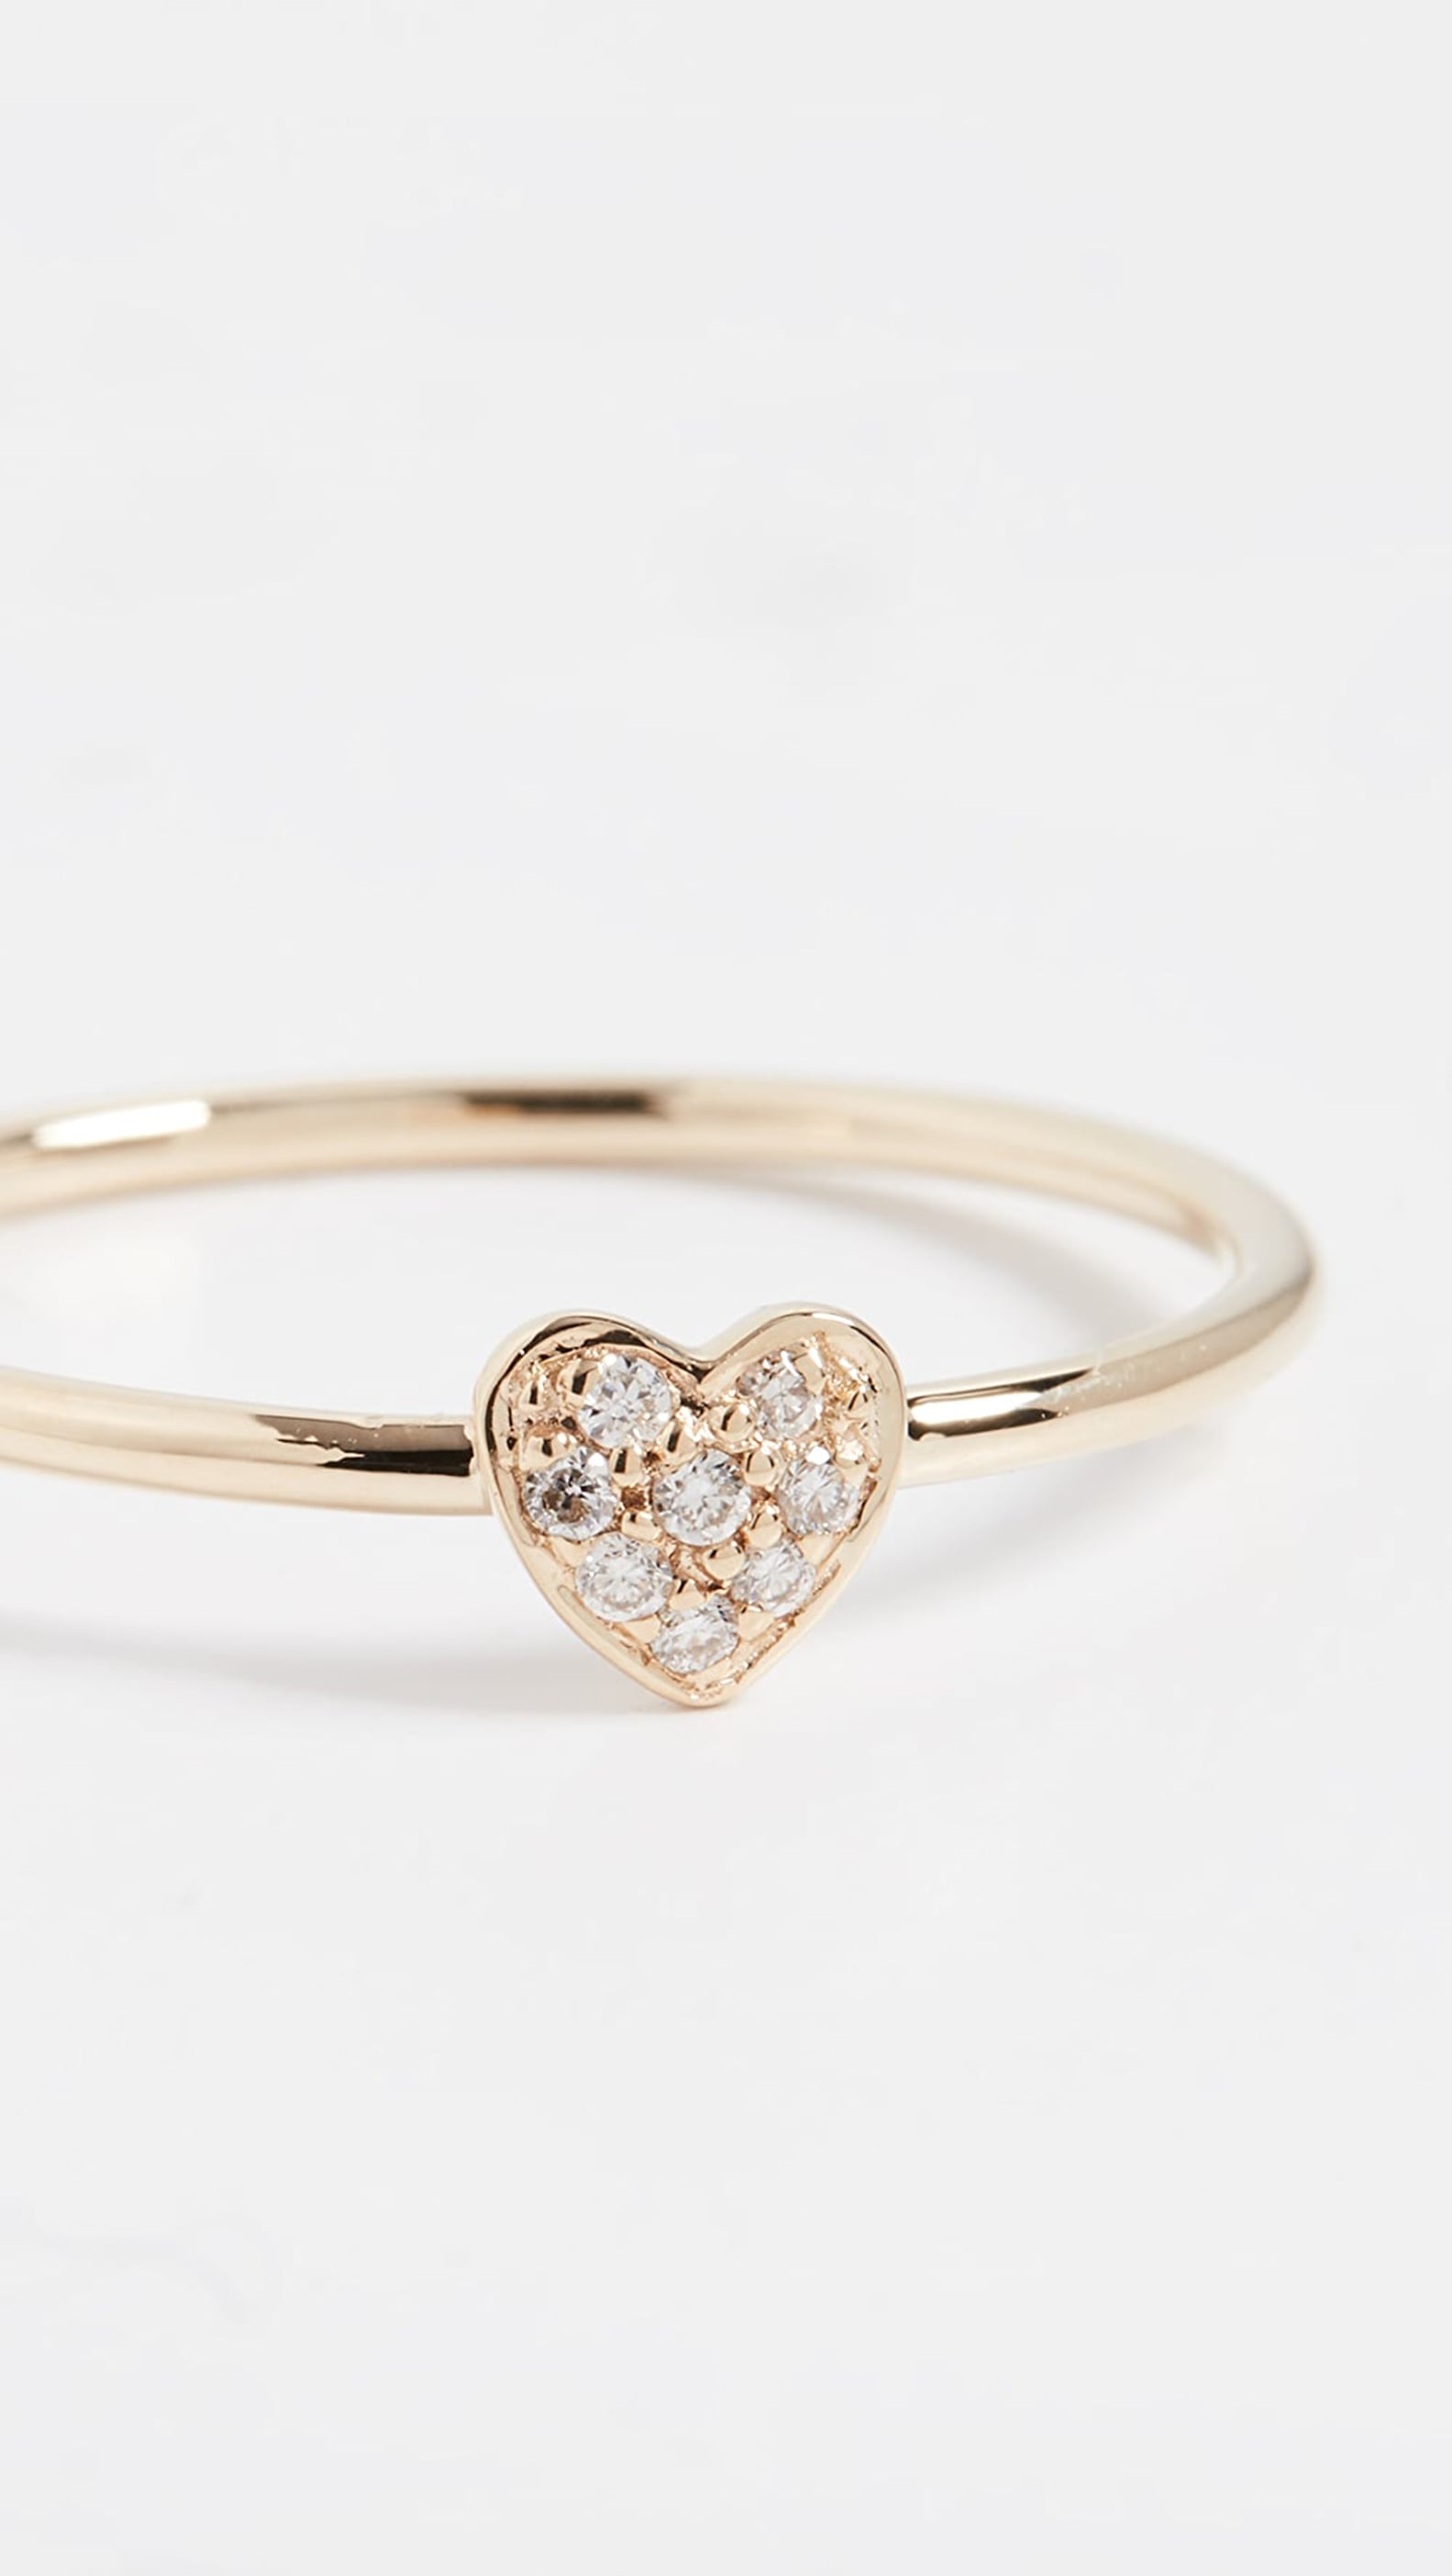 The Best Heart-Shaped Jewelry | POPSUGAR Fashion